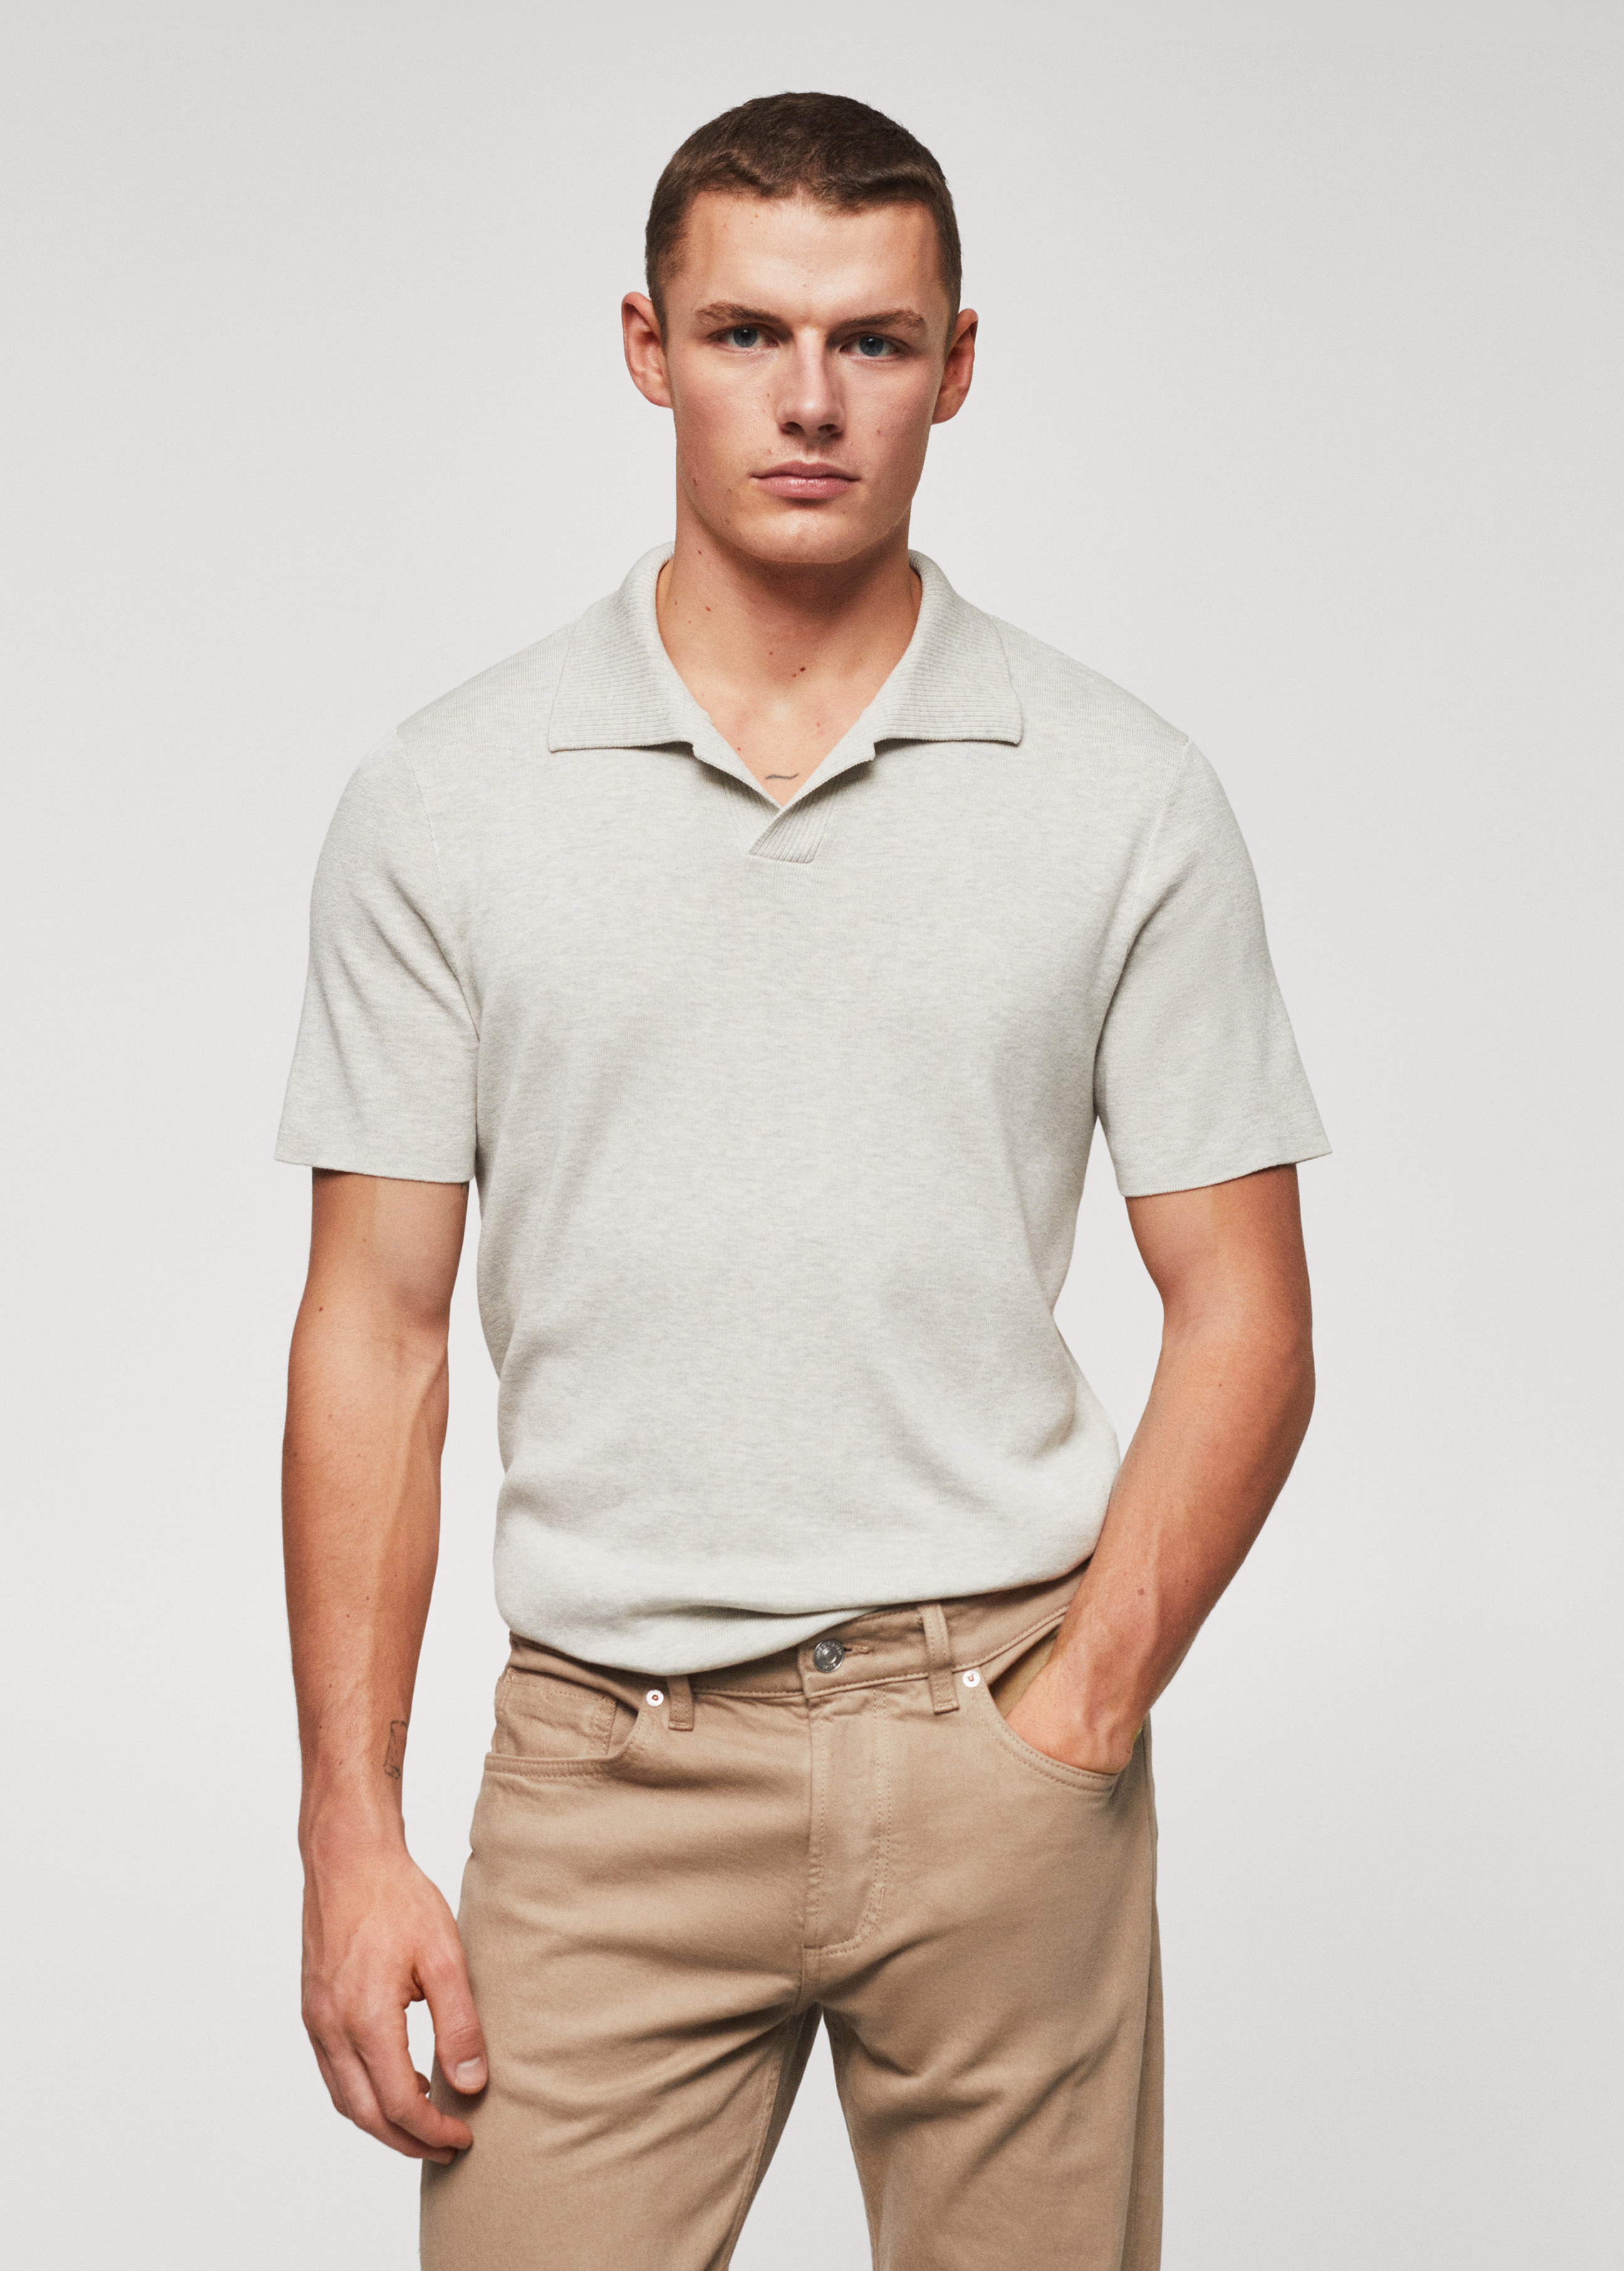 Fine-knit polo shirt - Medium plane